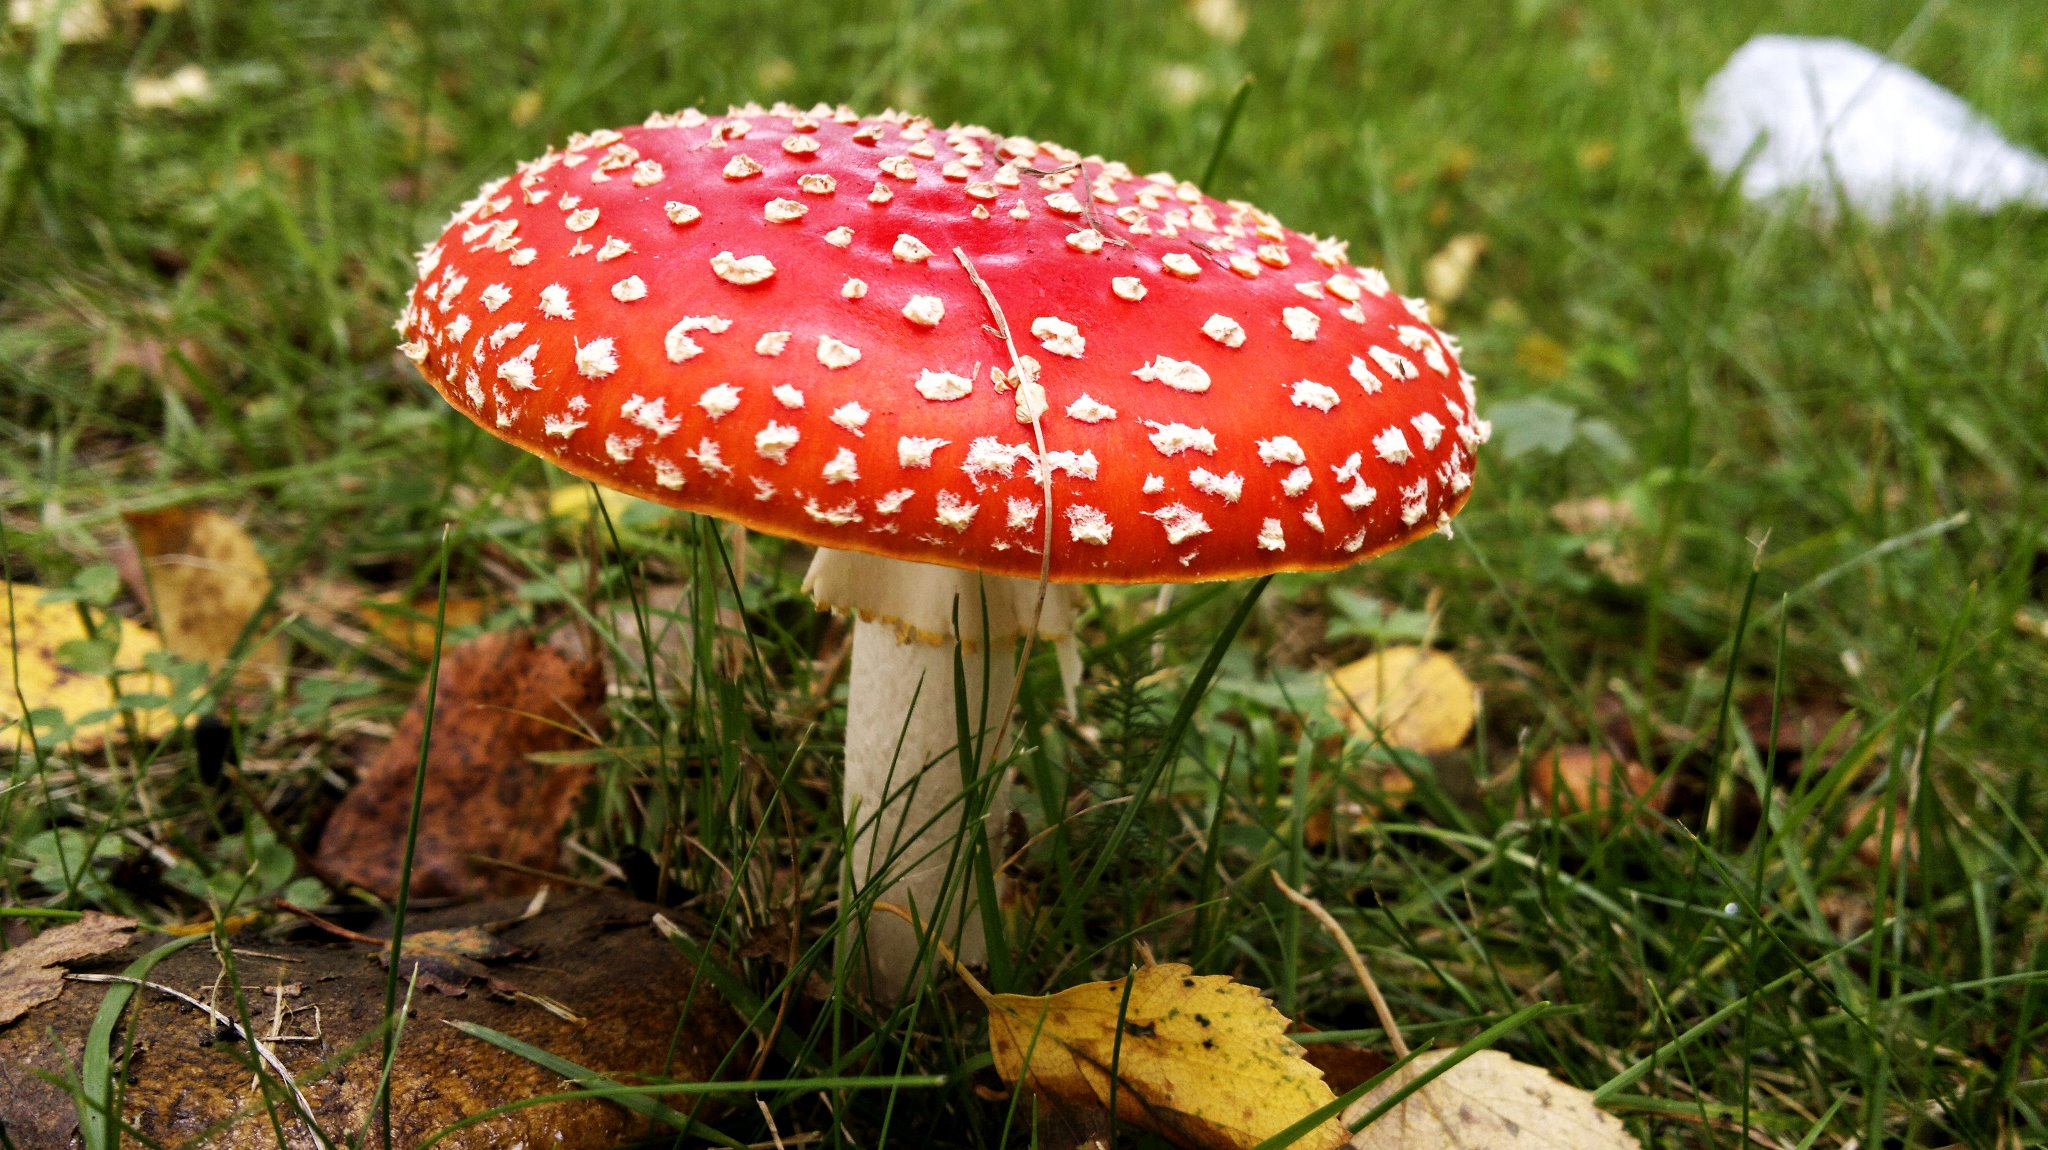 File:Wild mushroom in Finland.jpg - Wikimedia Commons